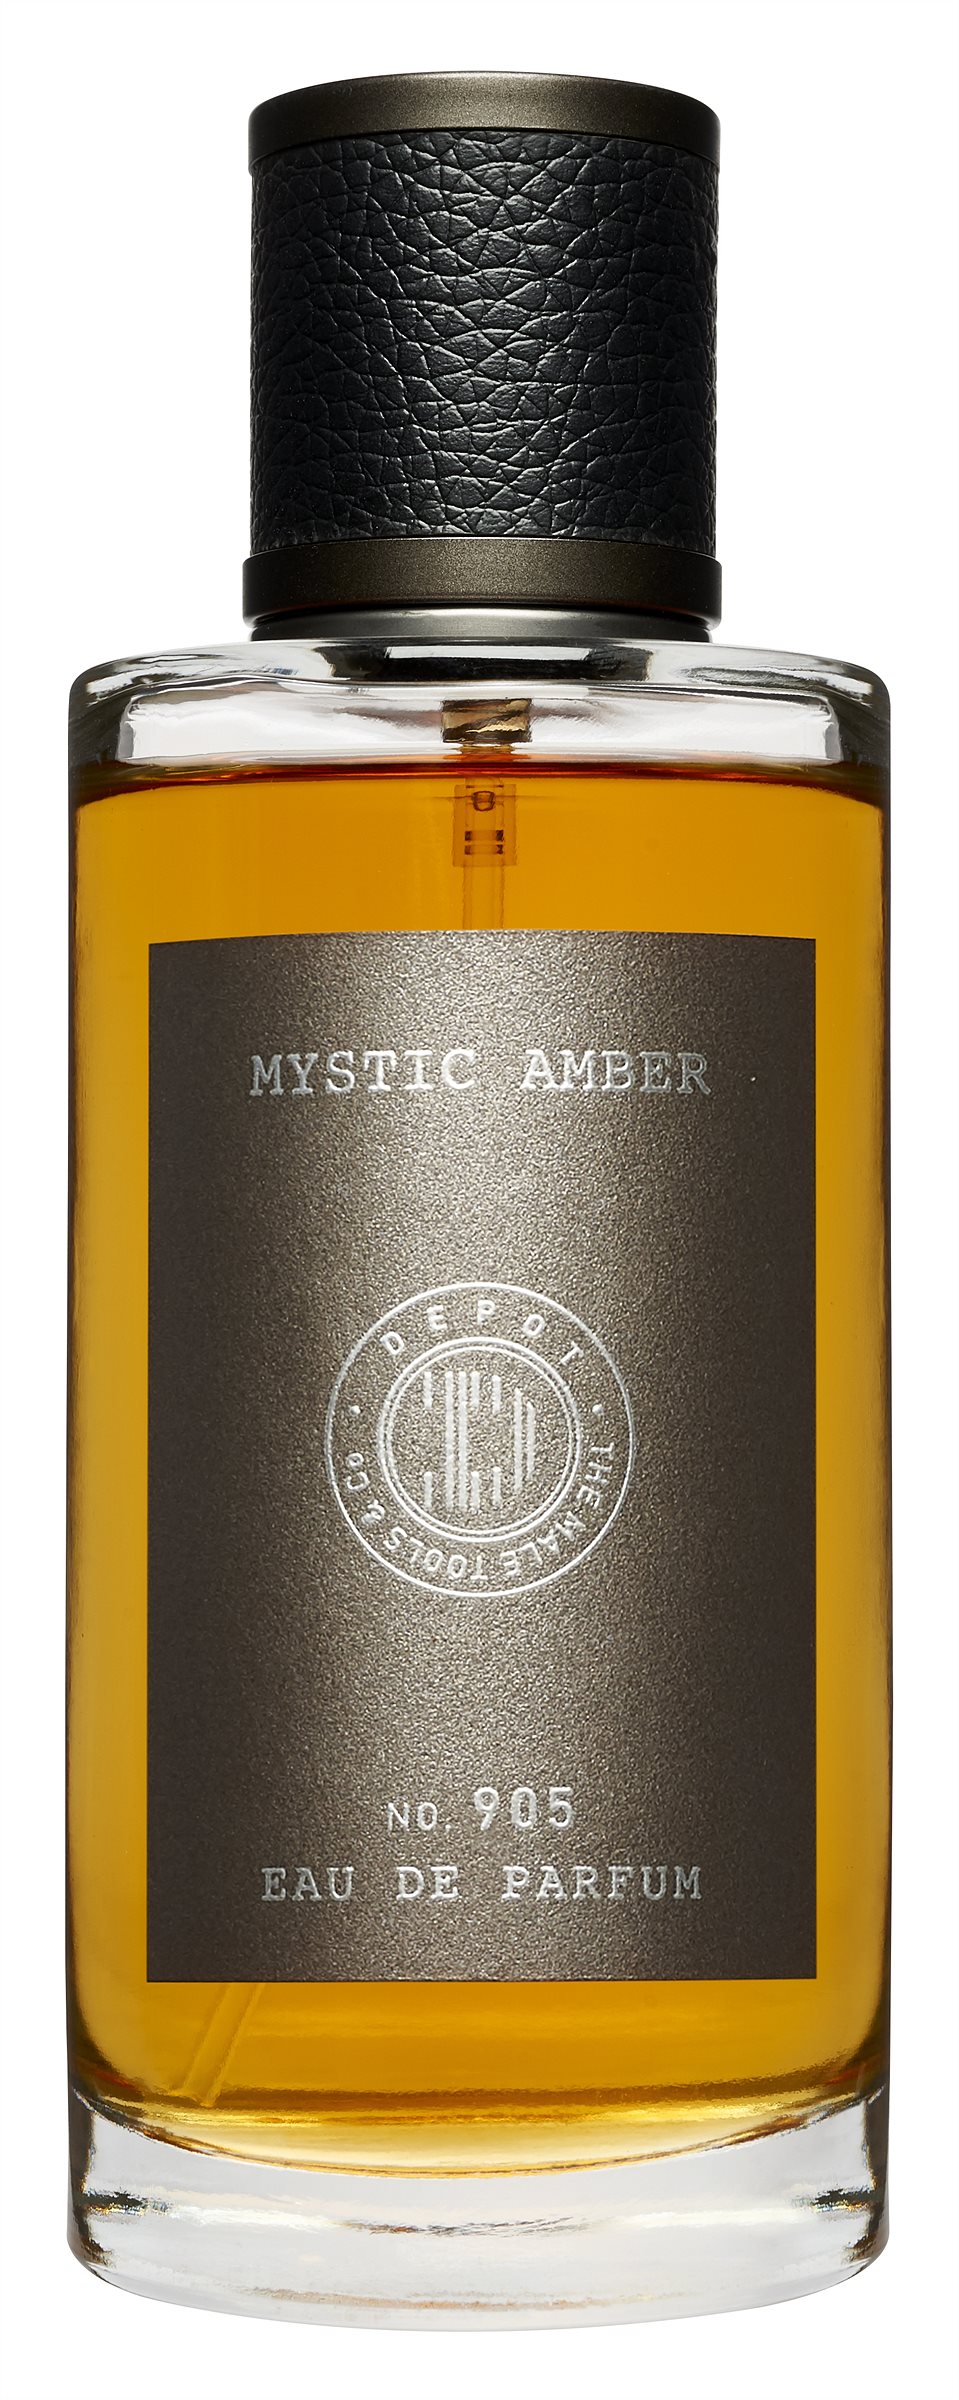 DEPOT_905 Mystic Amber Parfum_EUR 88,-